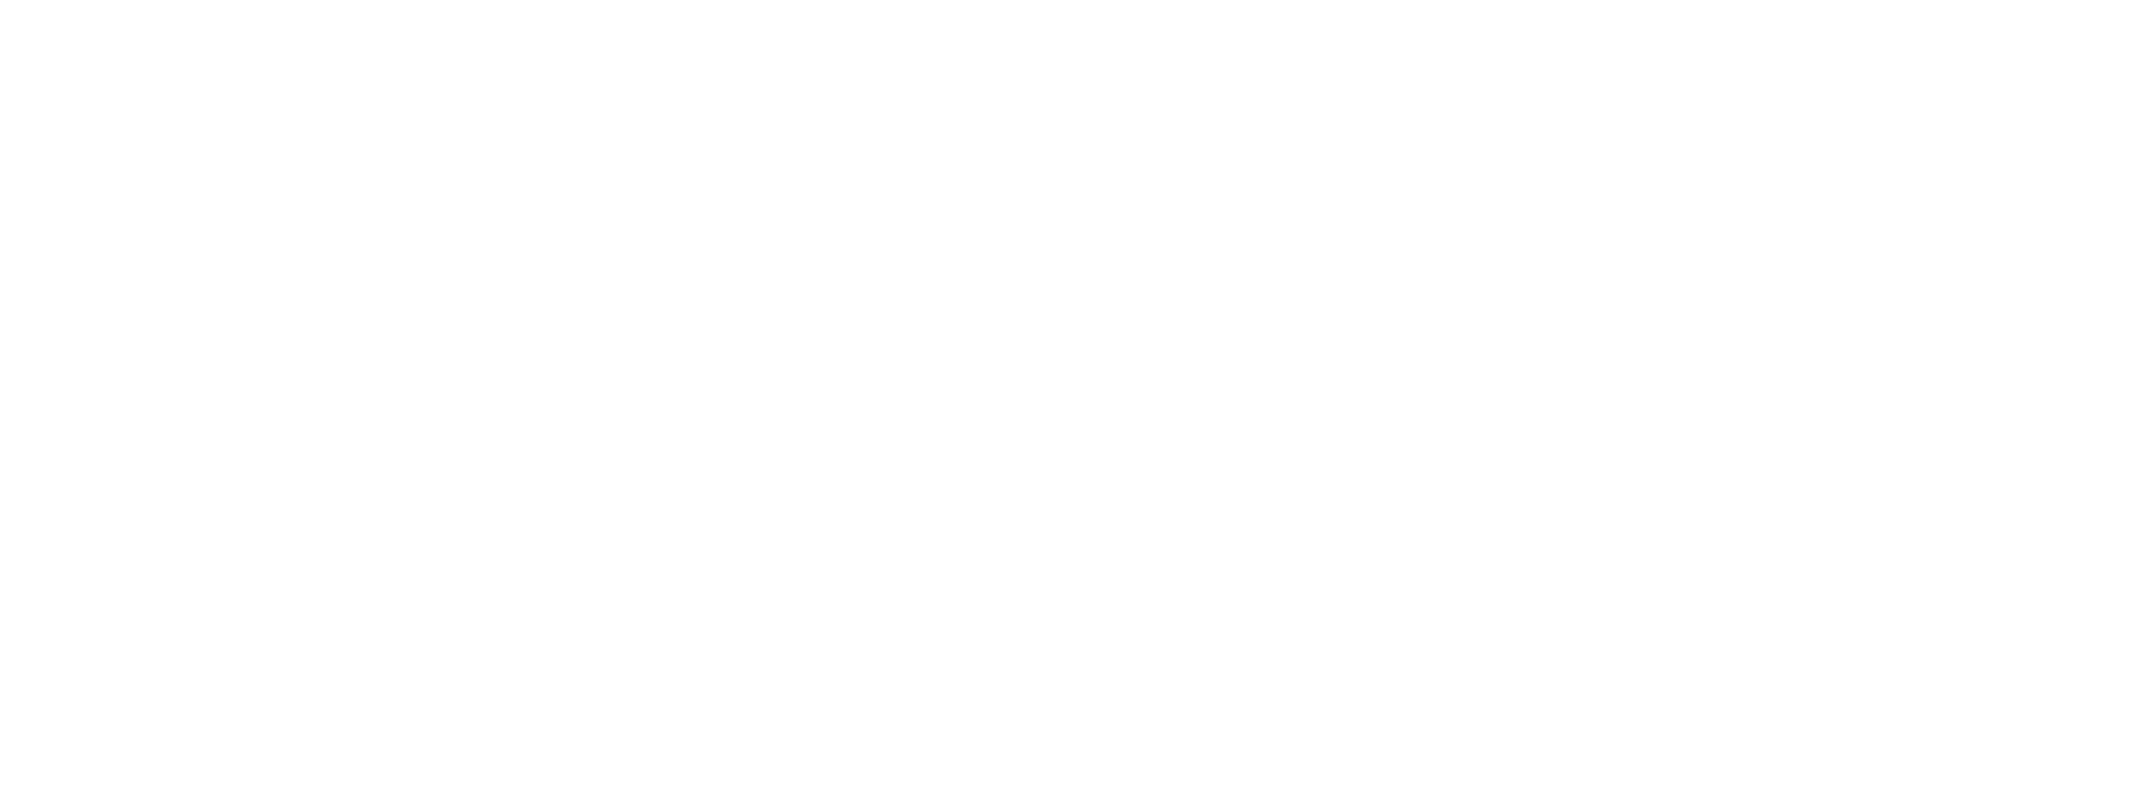 Matrix Traffic and Transport Data